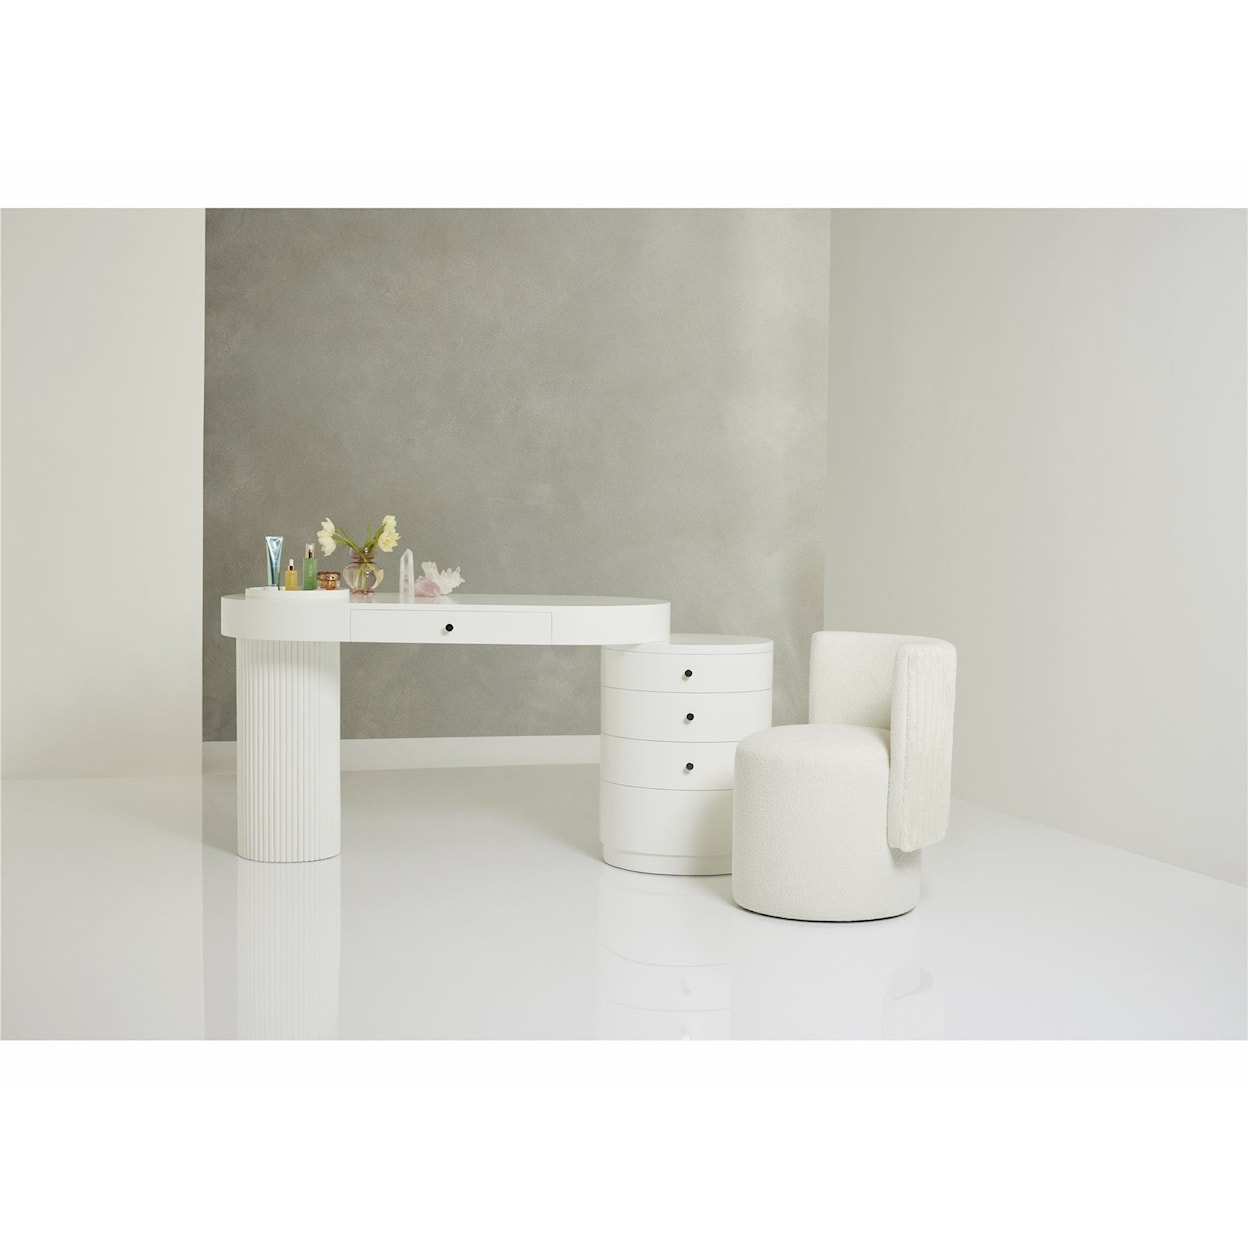 Universal Tranquility - Miranda Kerr Home Mode Vanity Chair